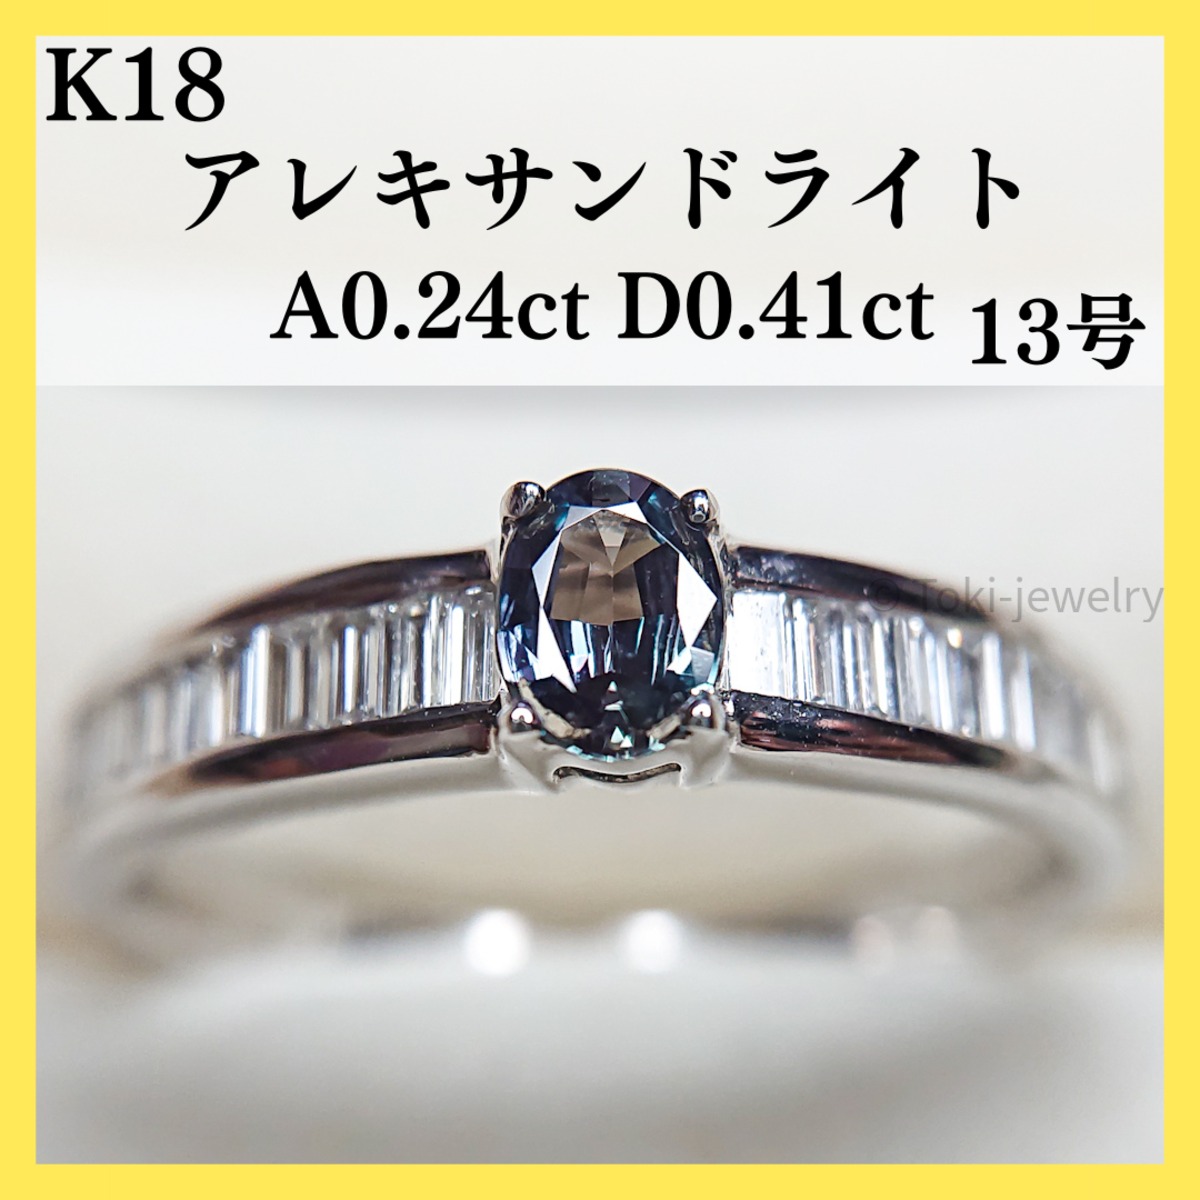 K18（ホワイトゴールドカラー） アレキサンドライト/テーパーダイヤモンド リング | toki-jewelry powered by BASE